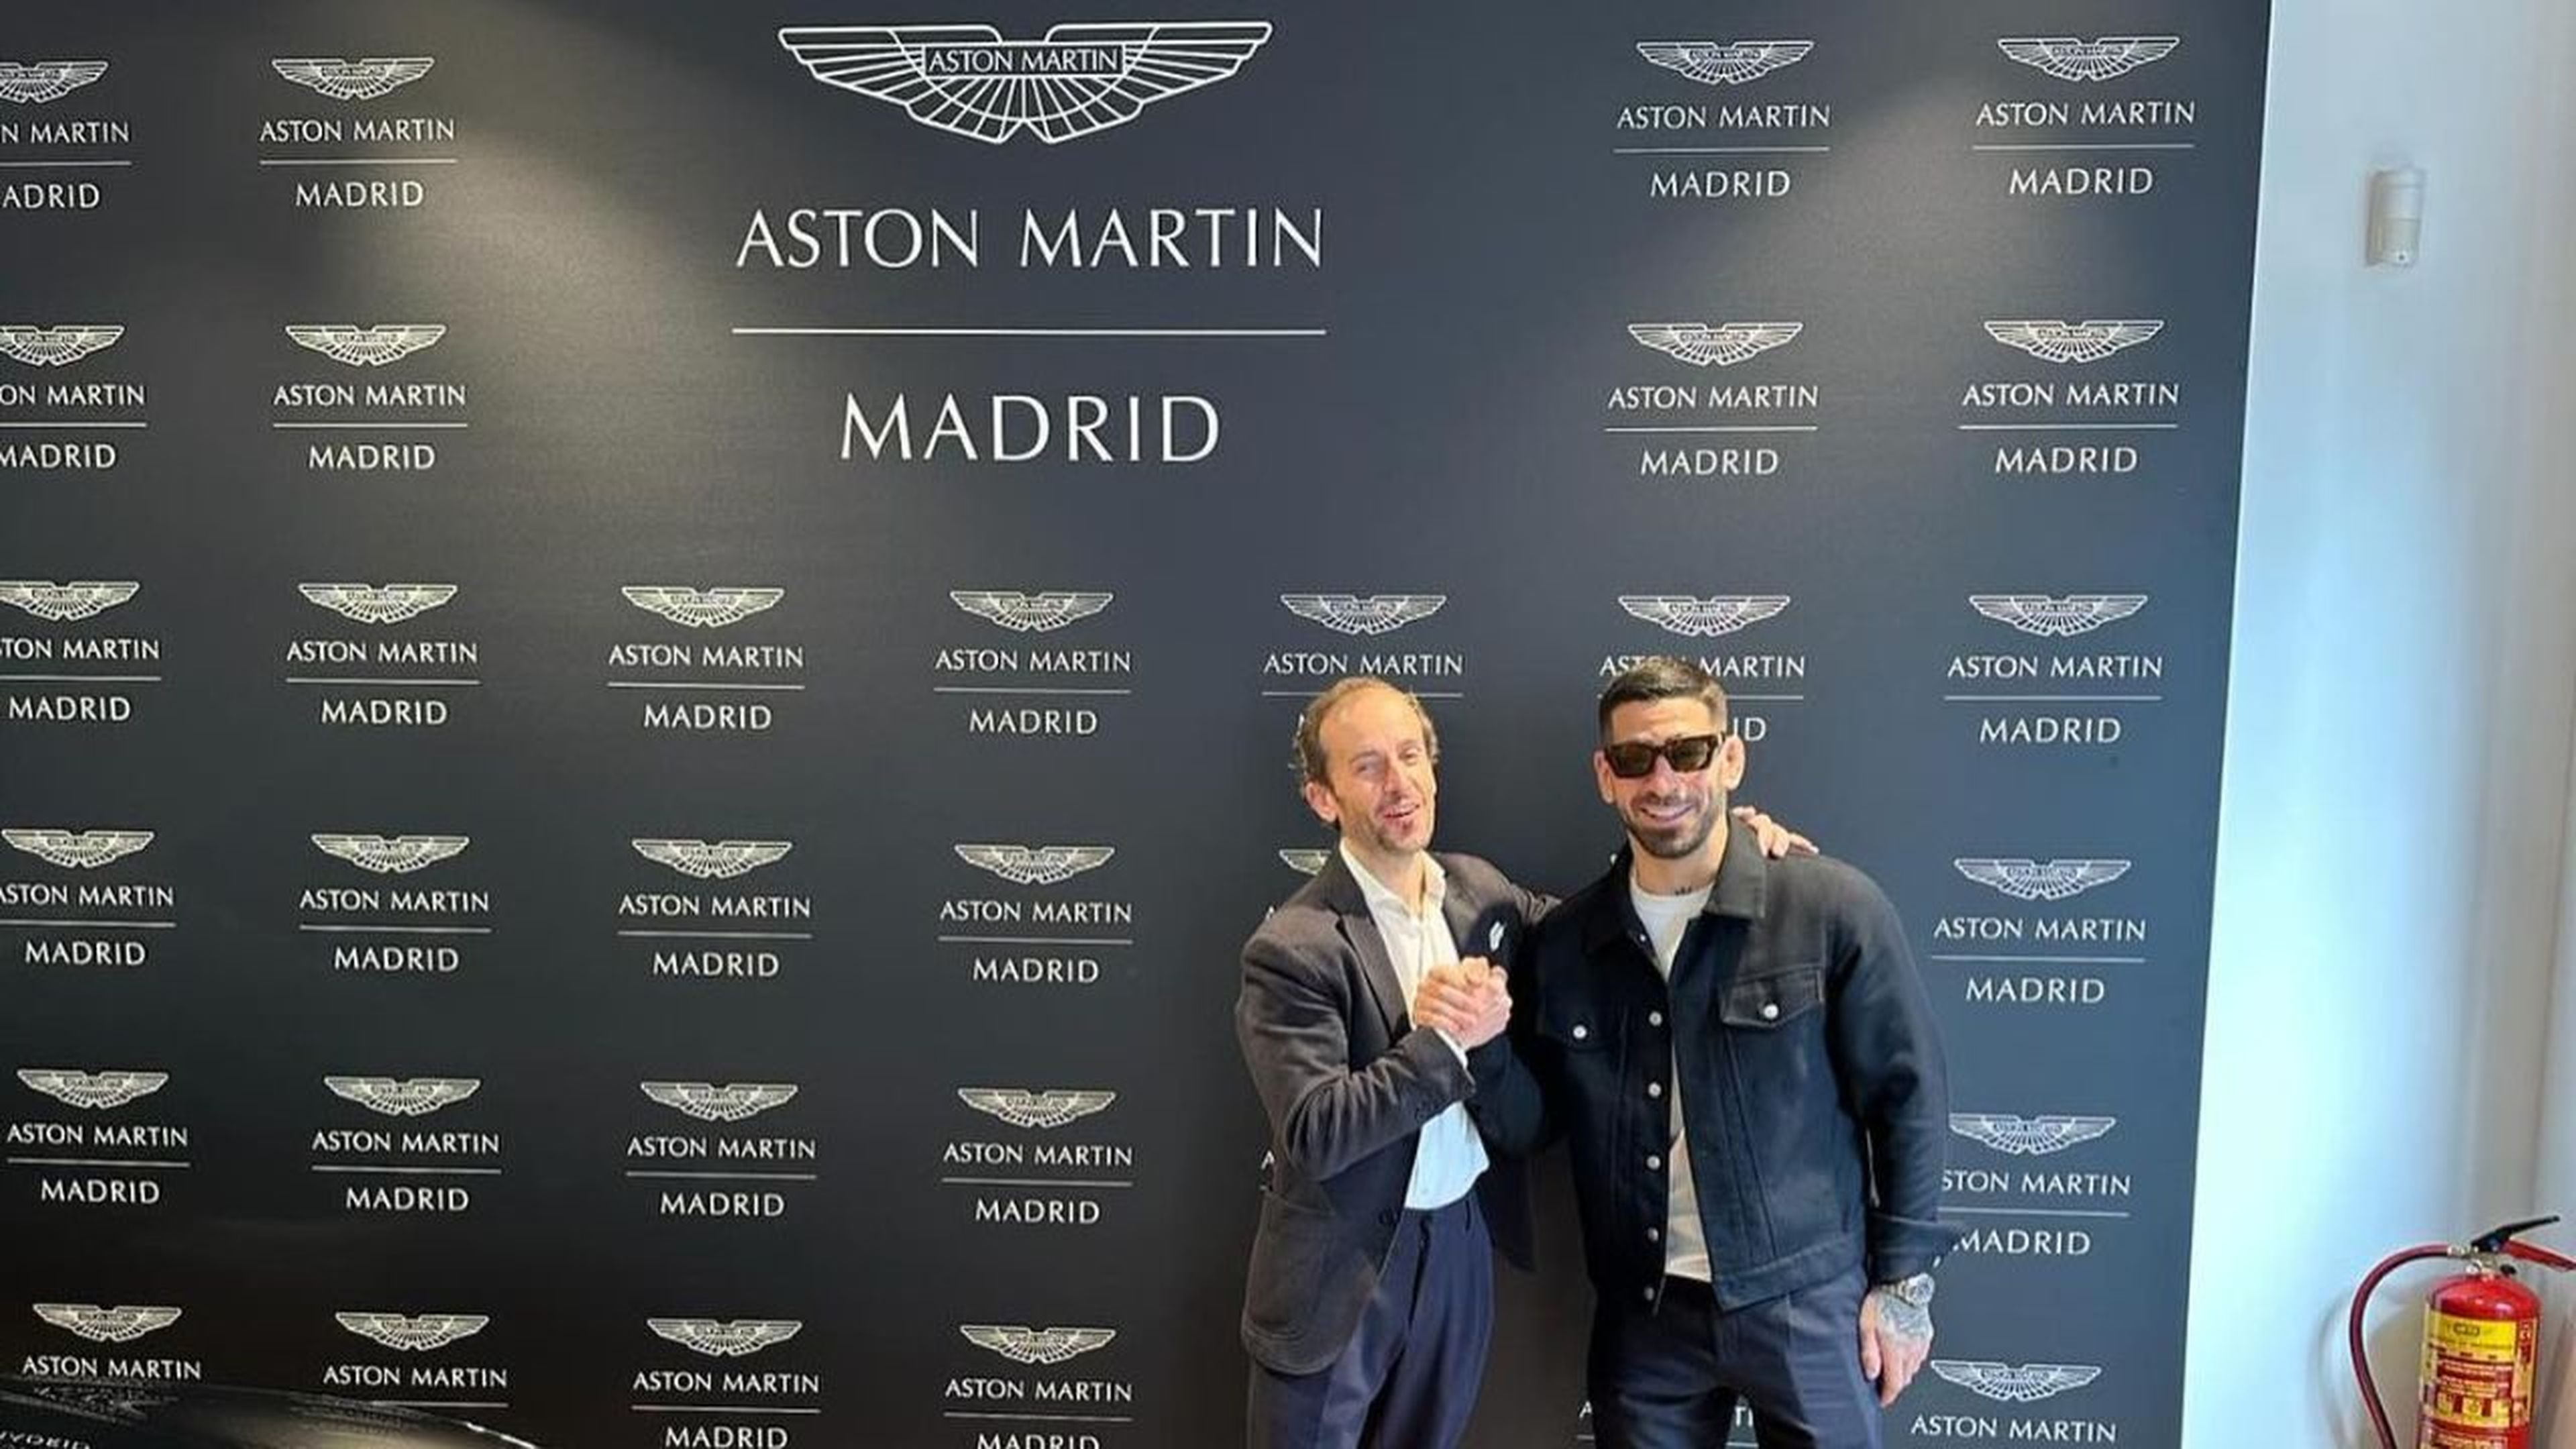 Ilia Topuria Aston Martin Madrid 